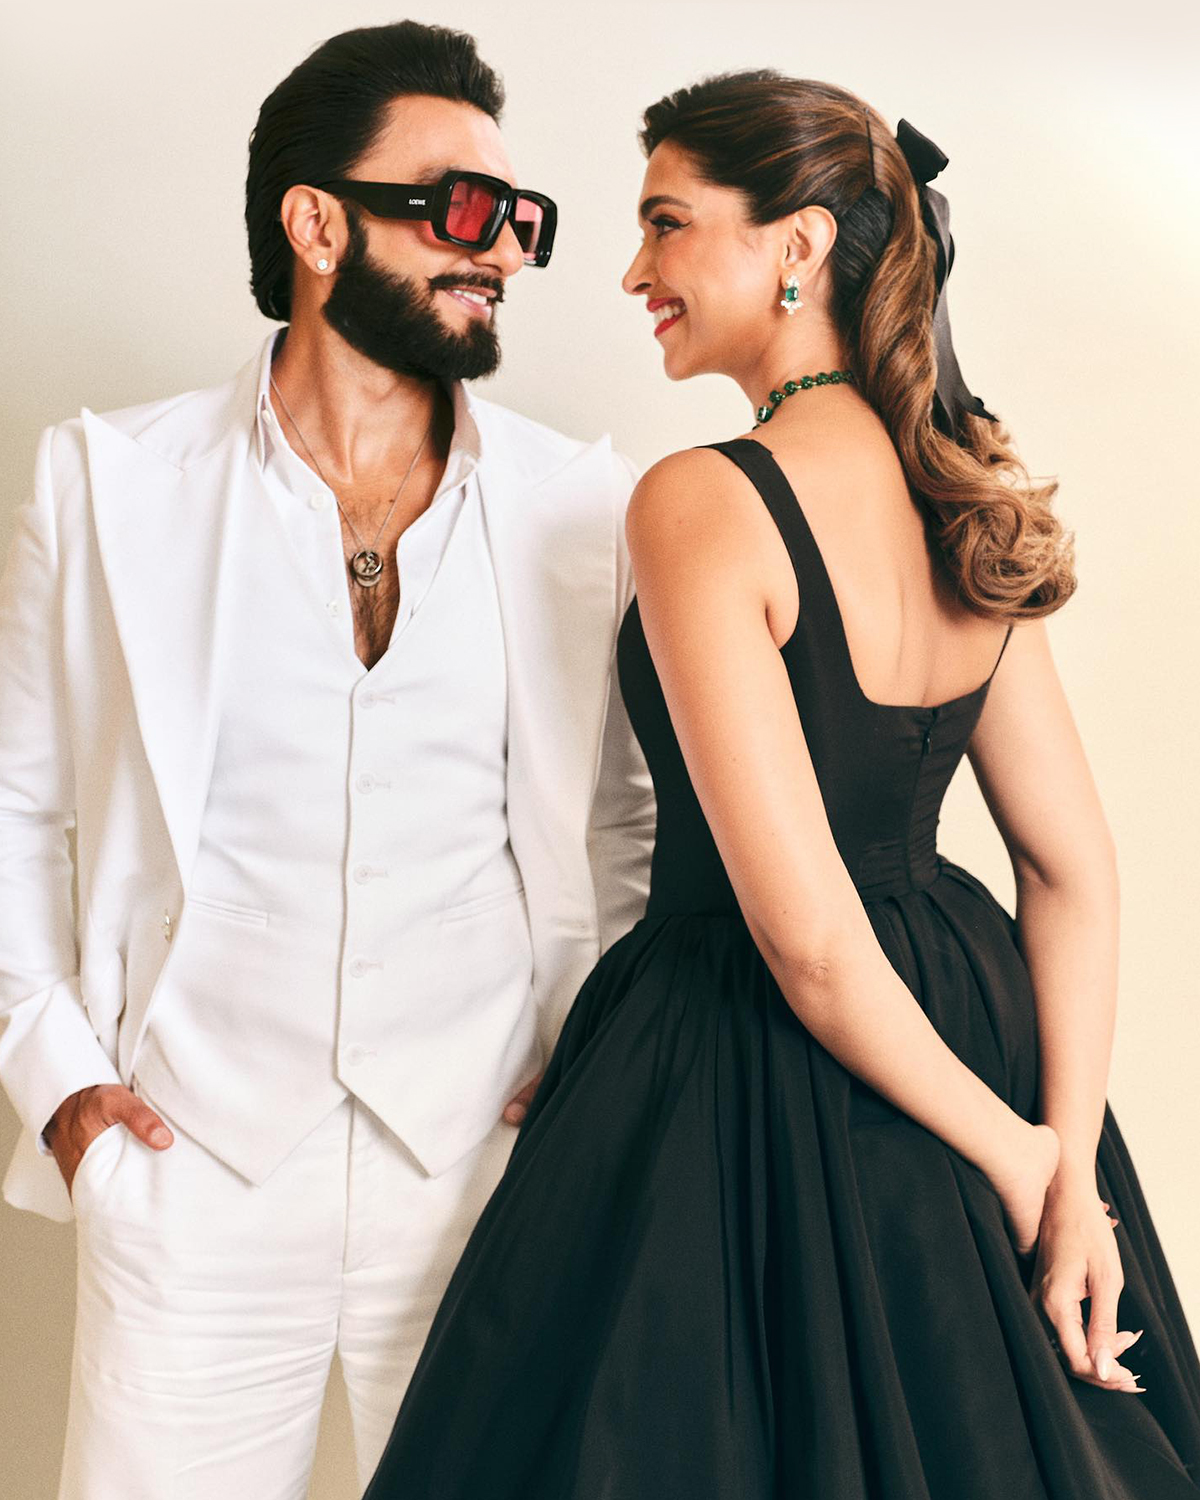 Deepika Padukone and Ranveer Singh, adorned in natural diamonds